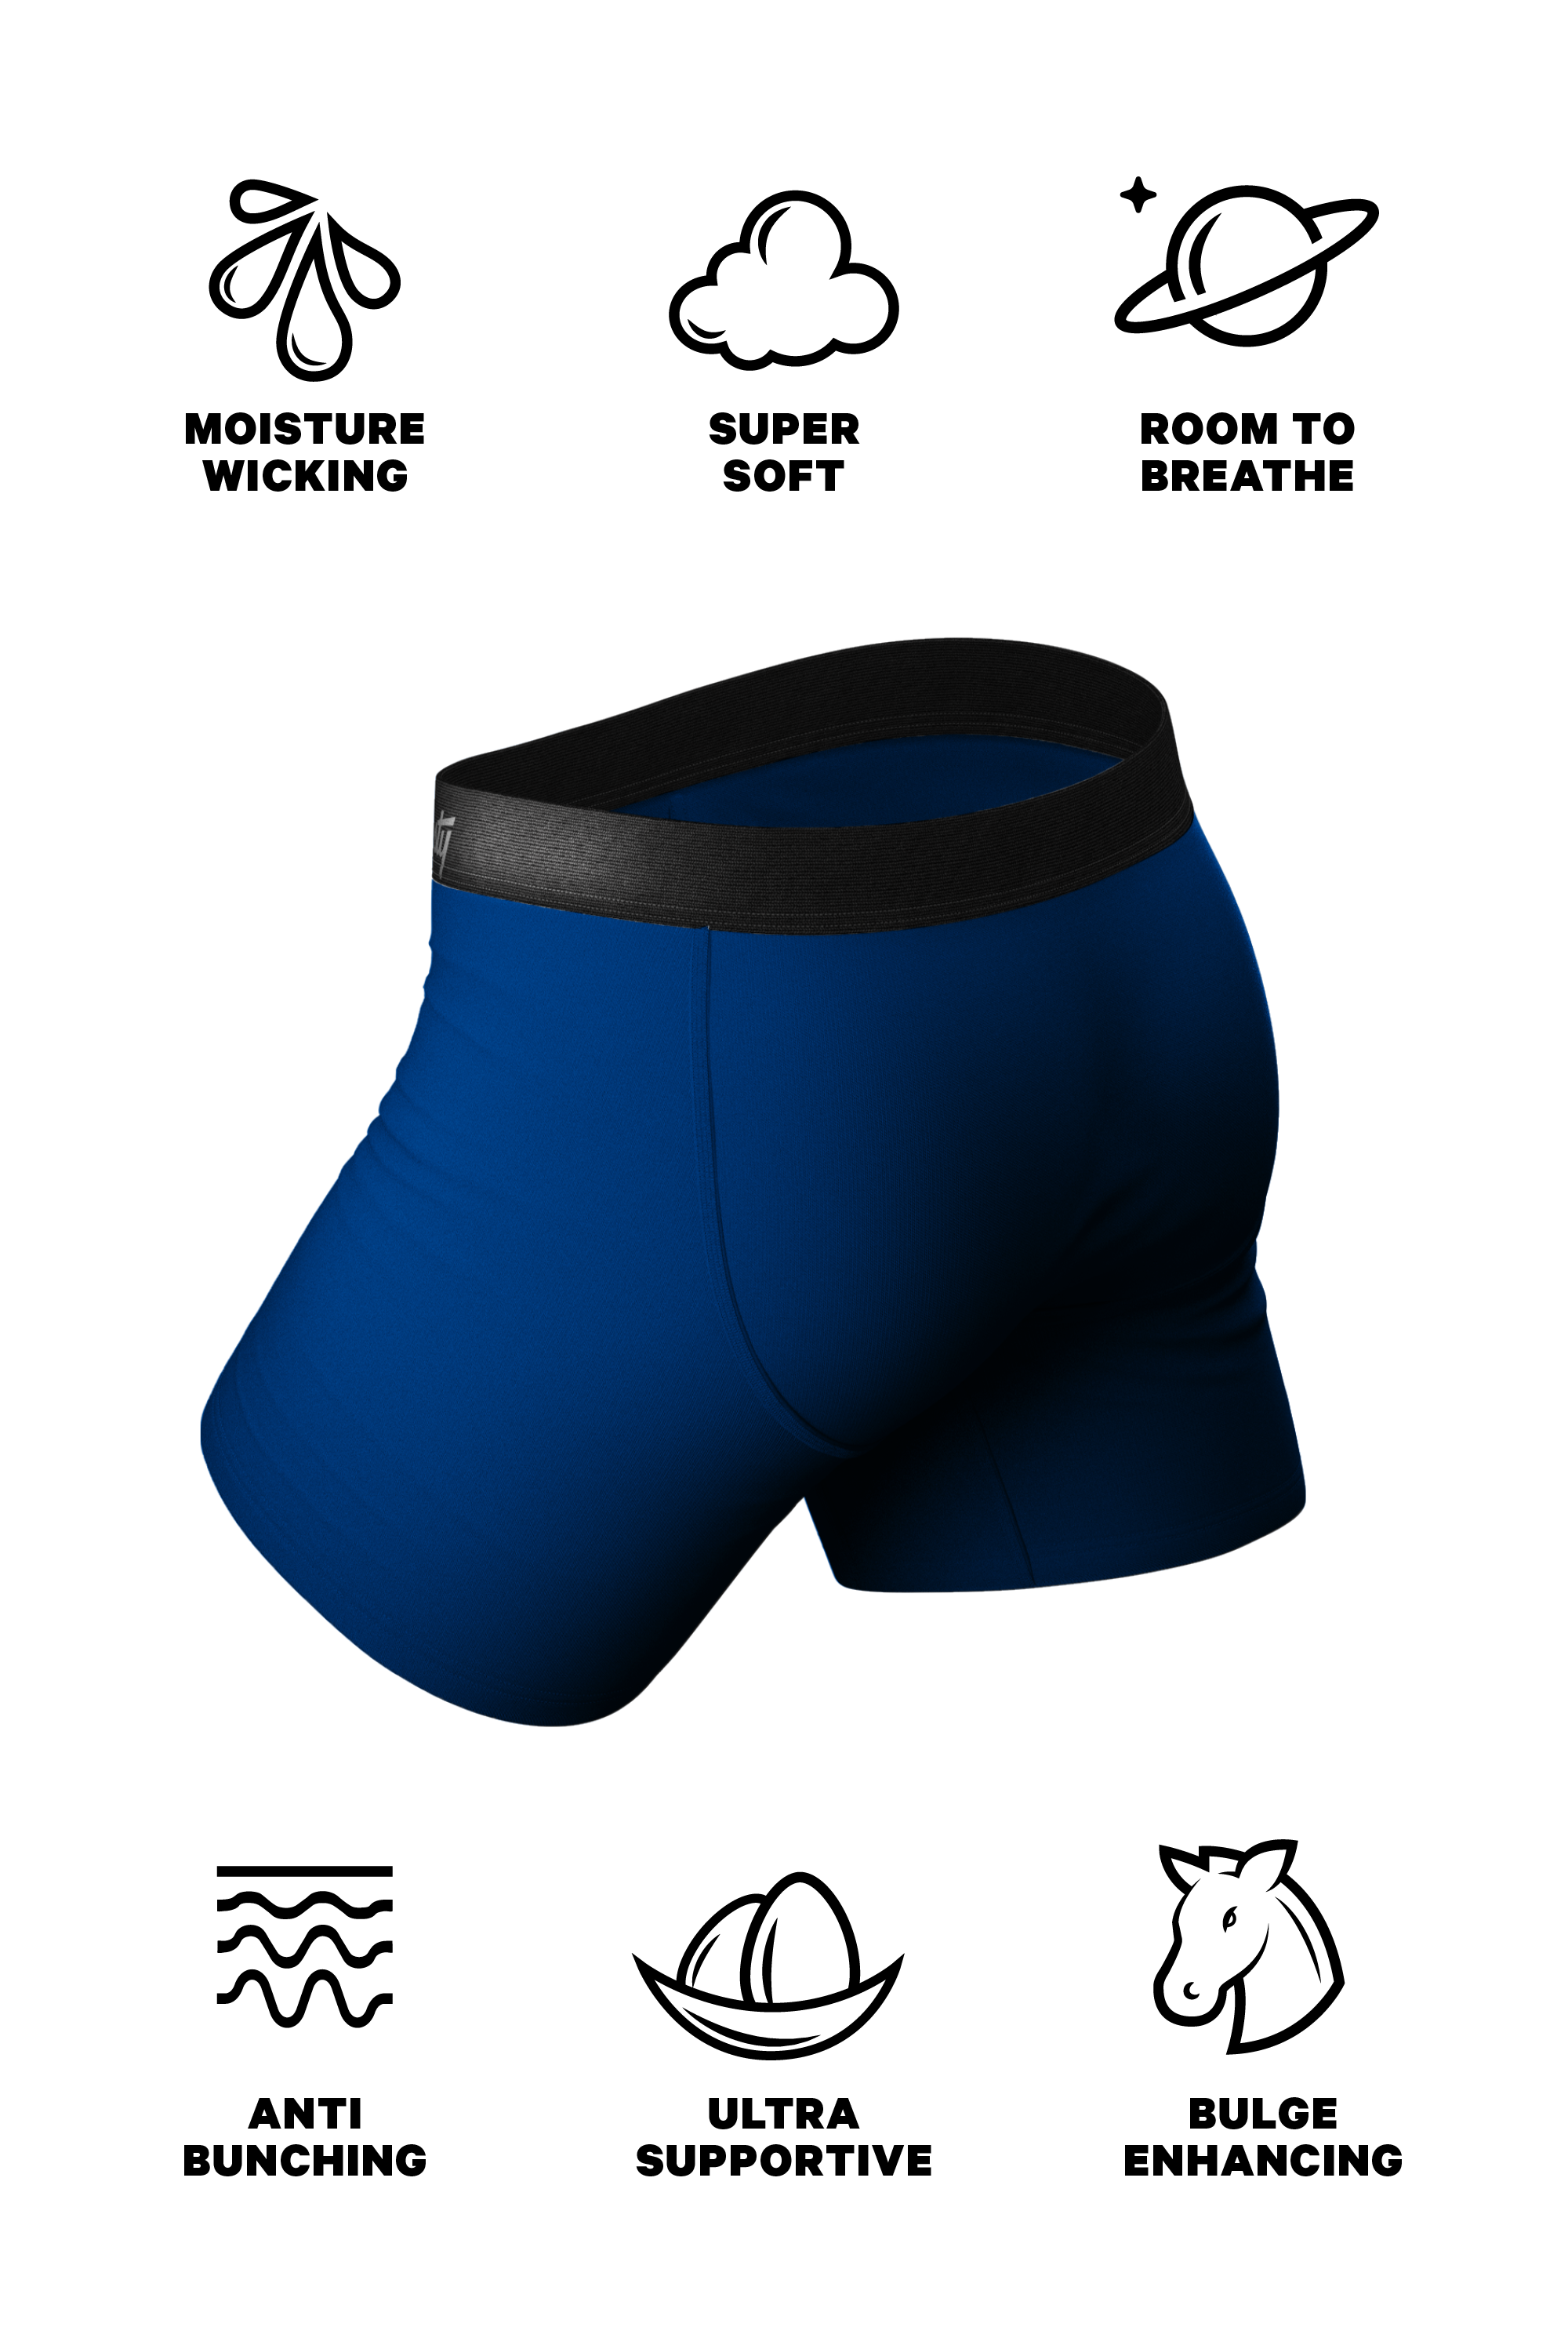 The Big Blue - Shinesty Dark Blue Ball Hammock Pouch Underwear 2X 